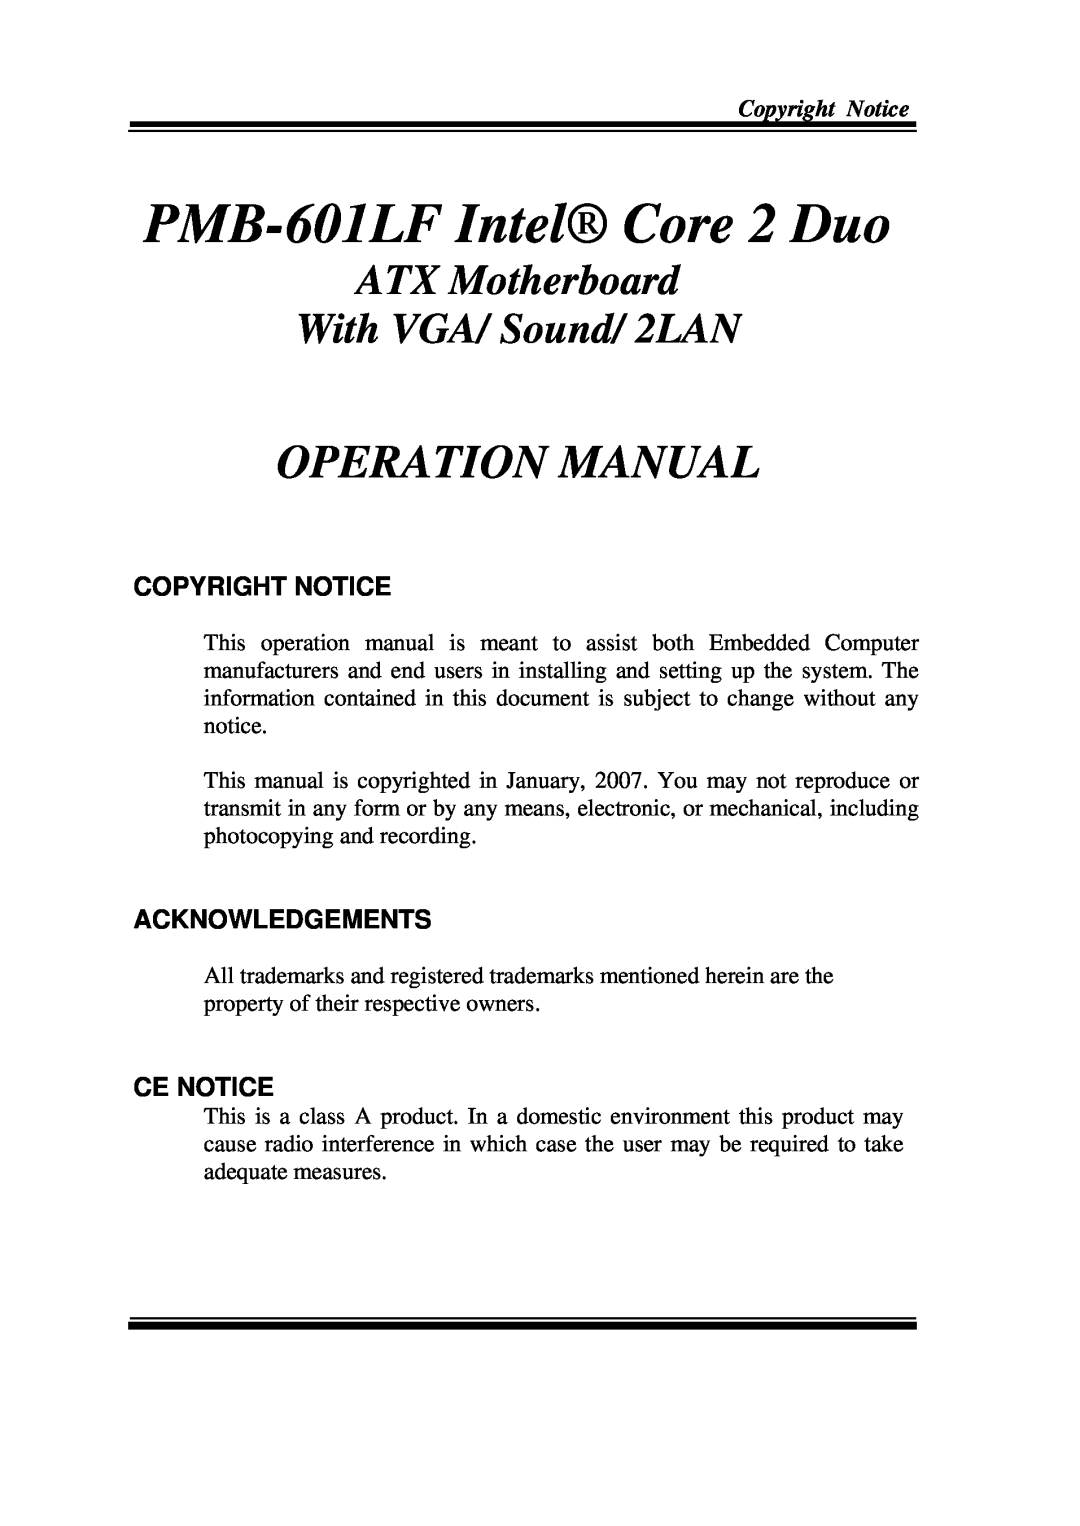 Intel user manual Copyright Notice, Acknowledgements, Ce Notice, PMB-601LFIntel Core 2 Duo, Operation Manual 